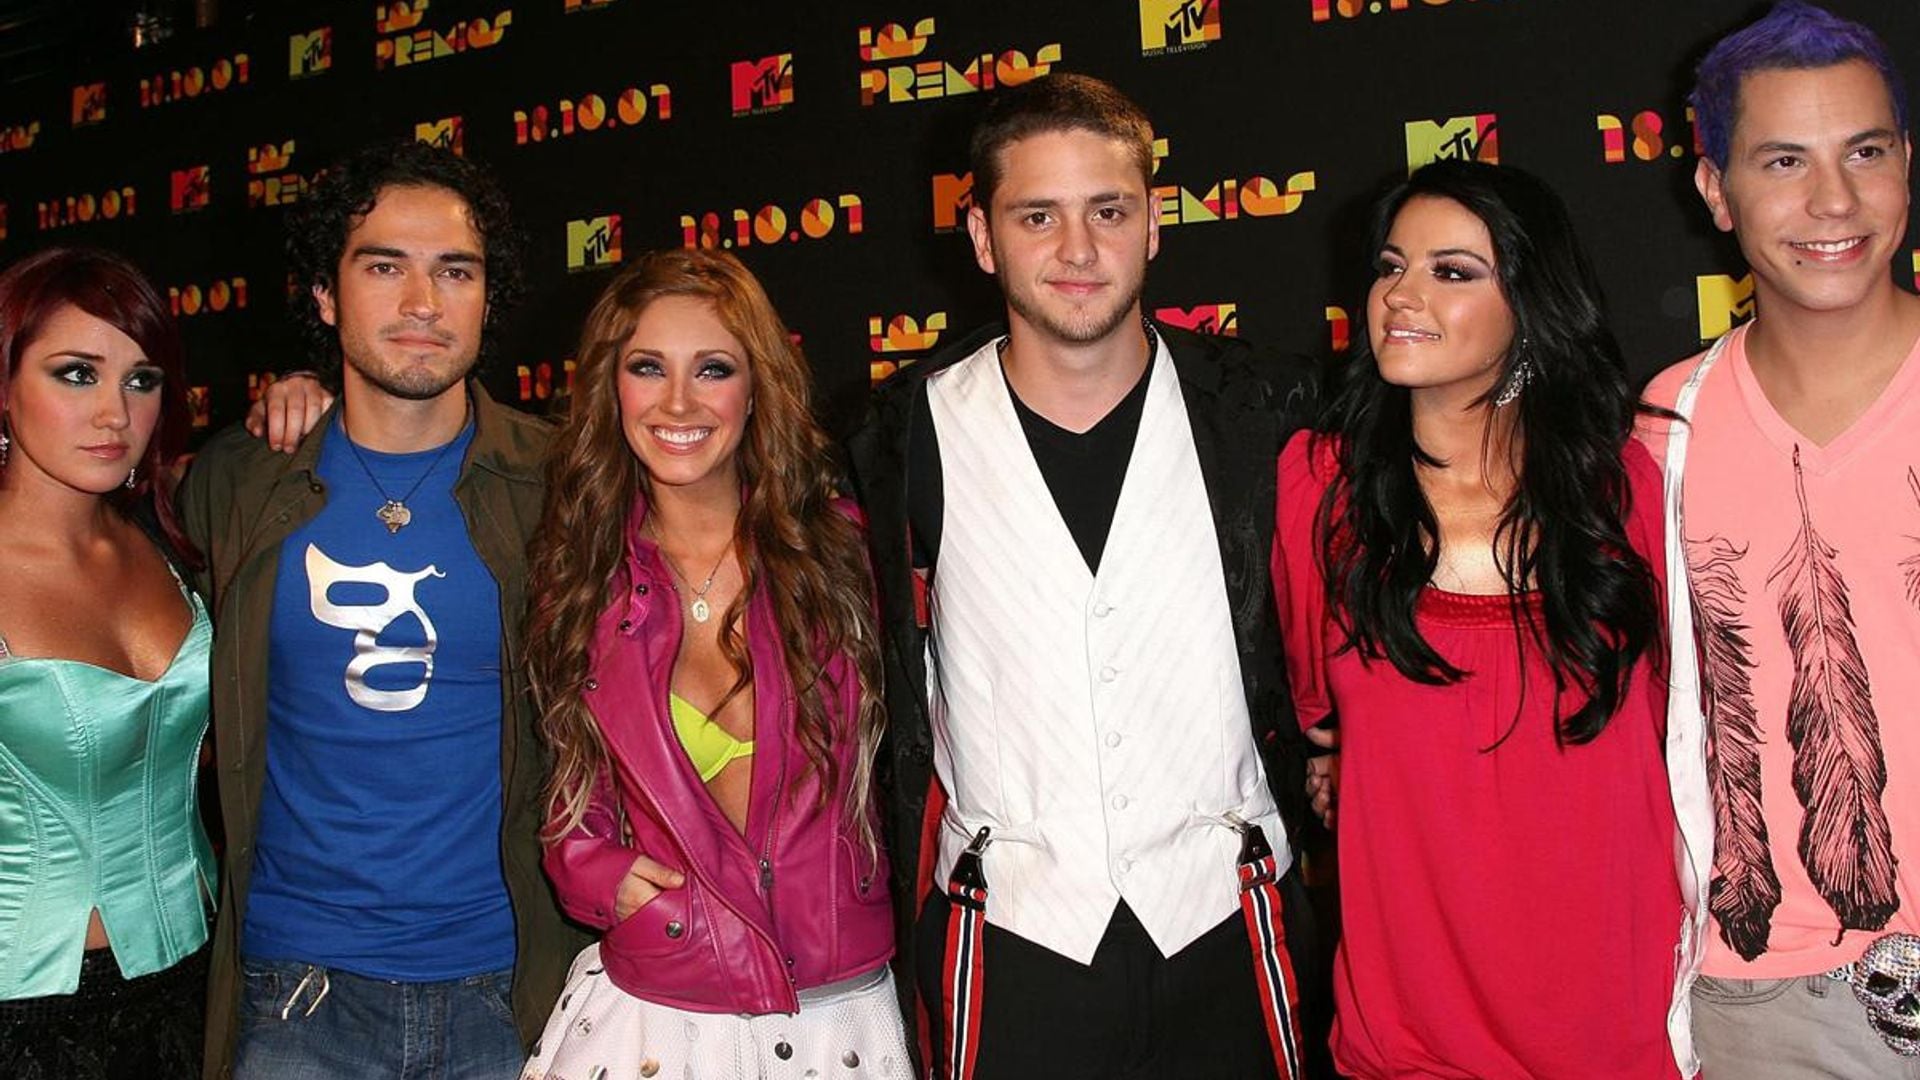 Los Premios MTV Latin America 2007 - Red Carpet